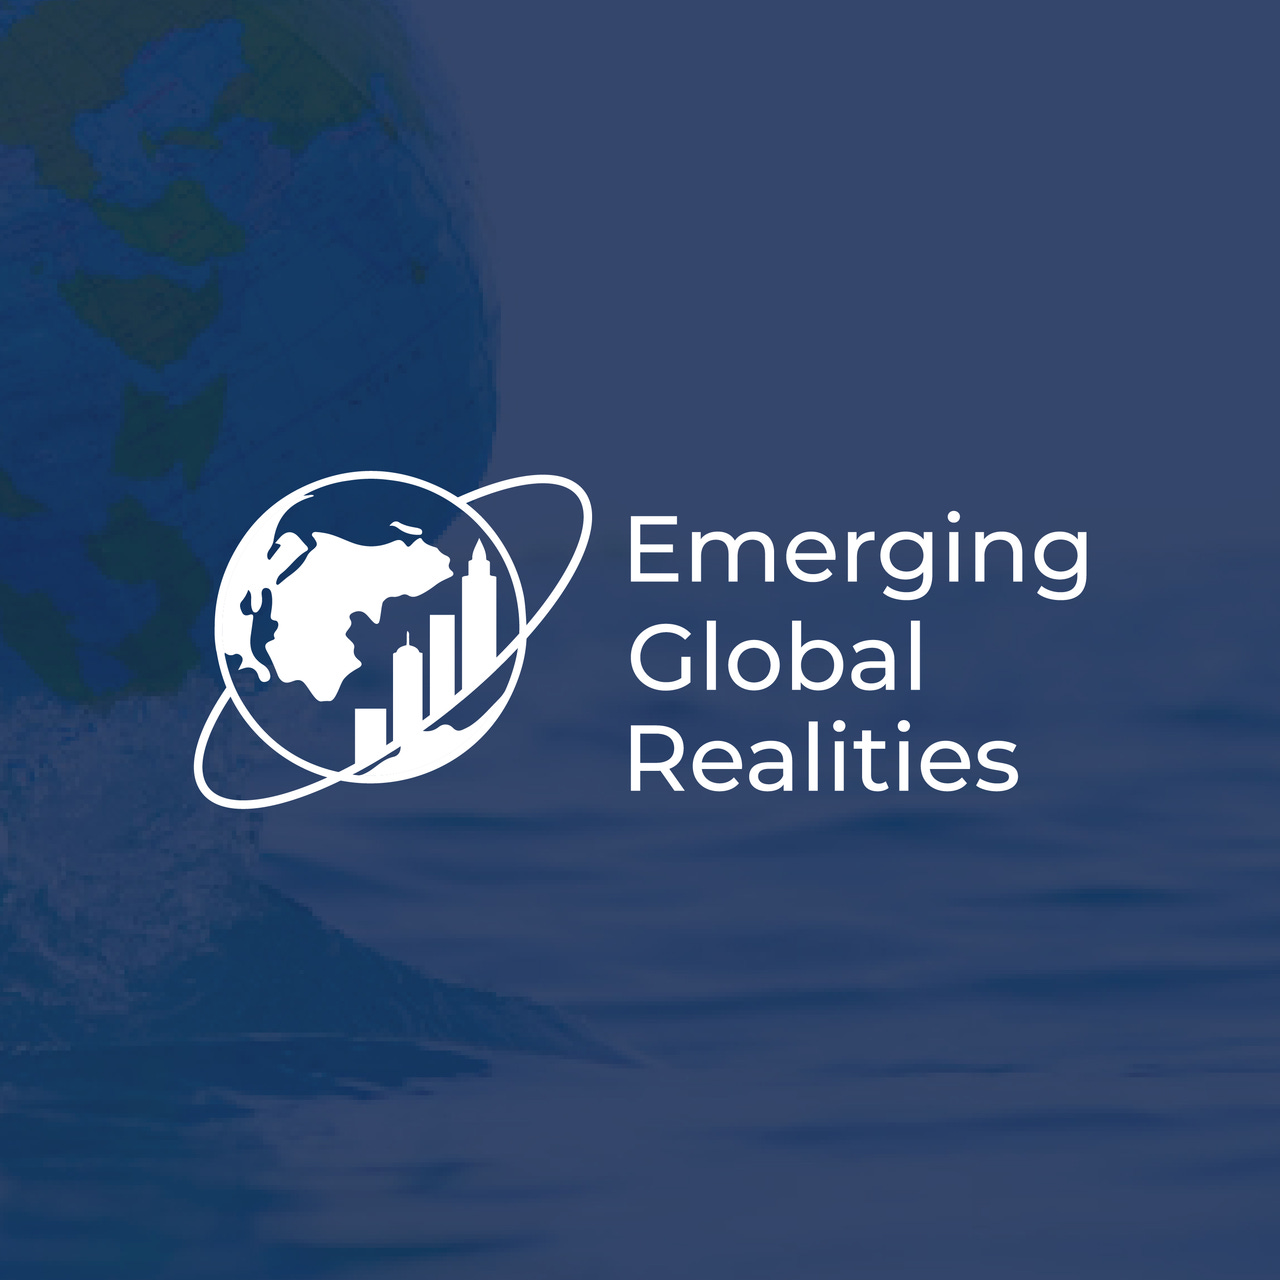 Emerging Global Realities